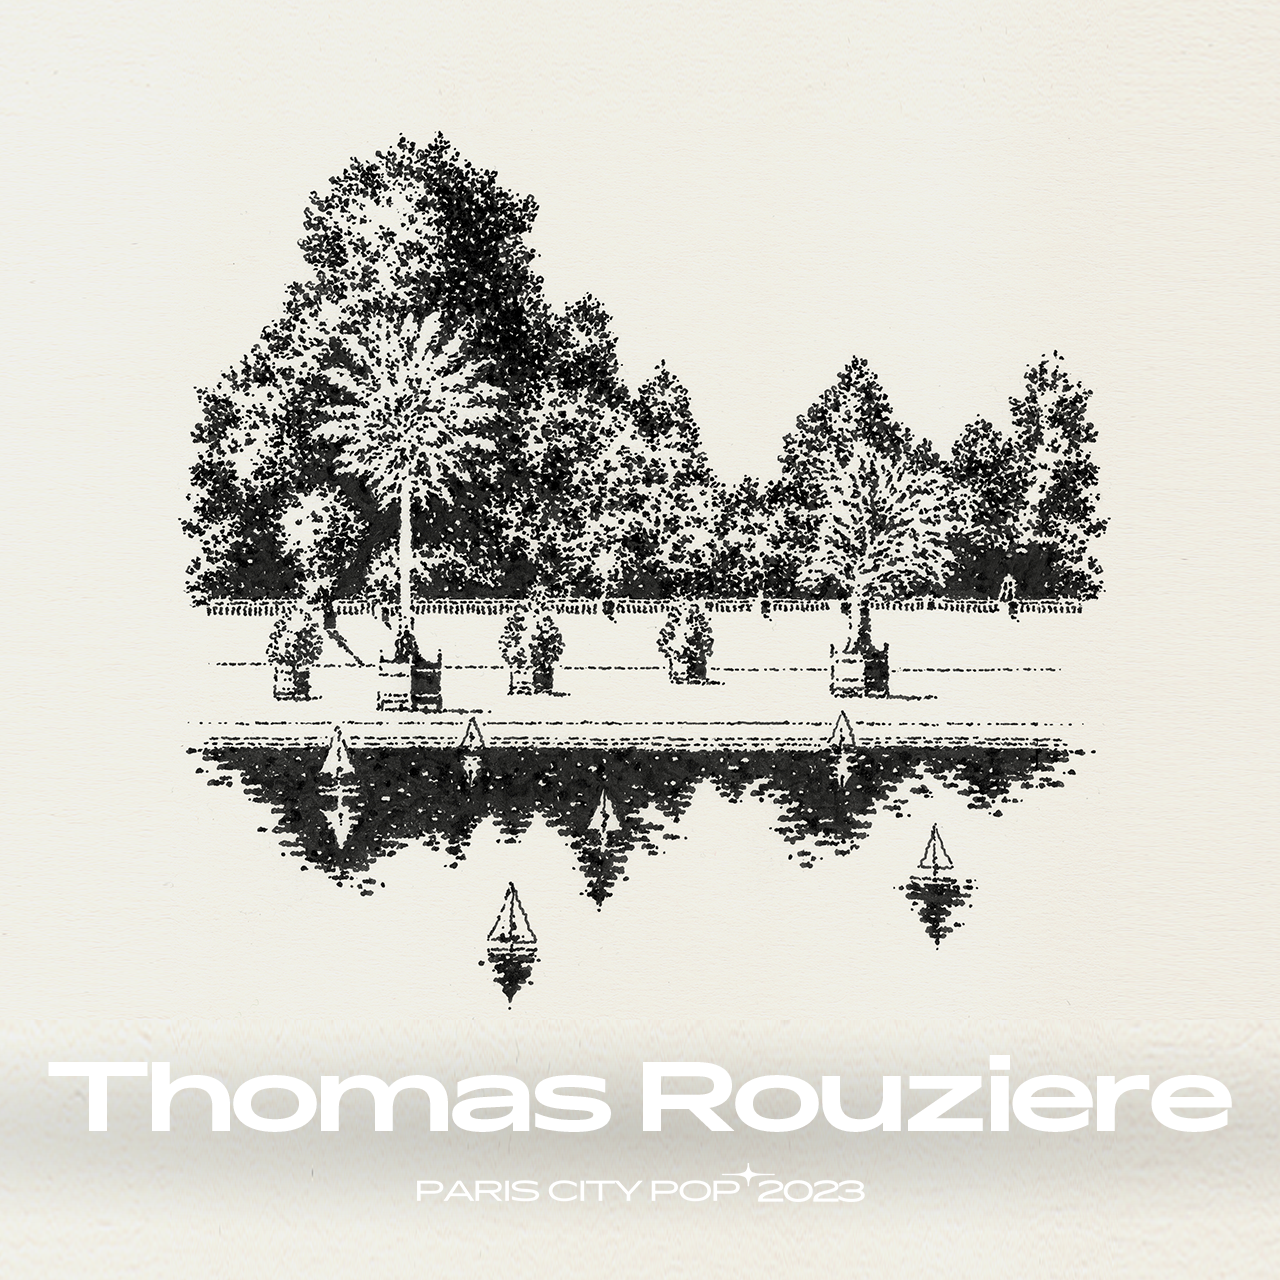 39-Thomas_Rouziere-copie